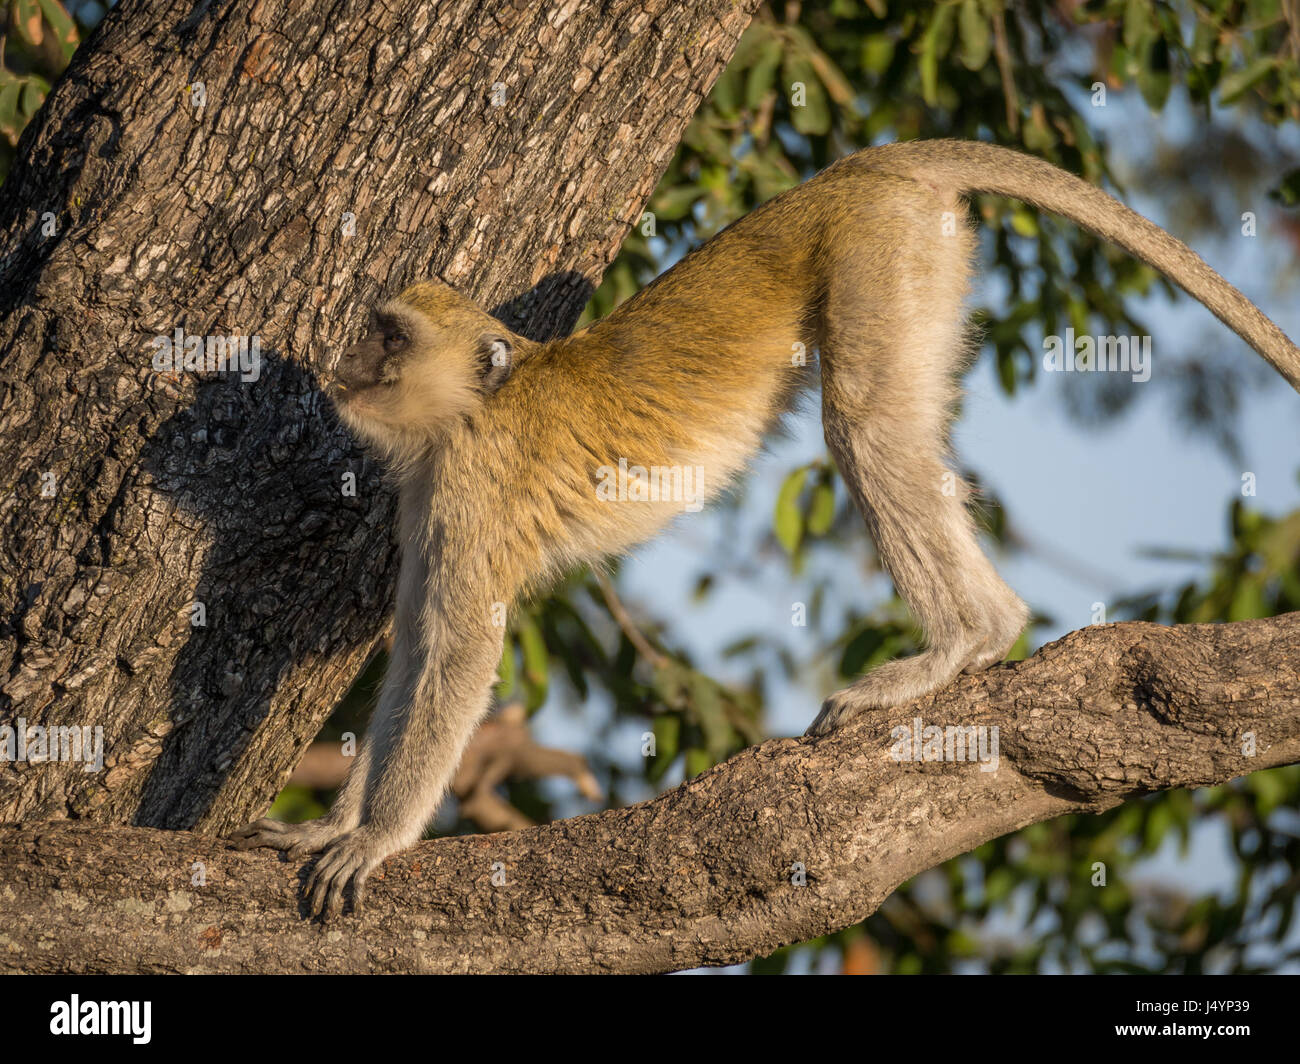 Vervet Monkey stretching its body in a tree on a sunny day, Chobe NP, Botswana, Africa. Stock Photo